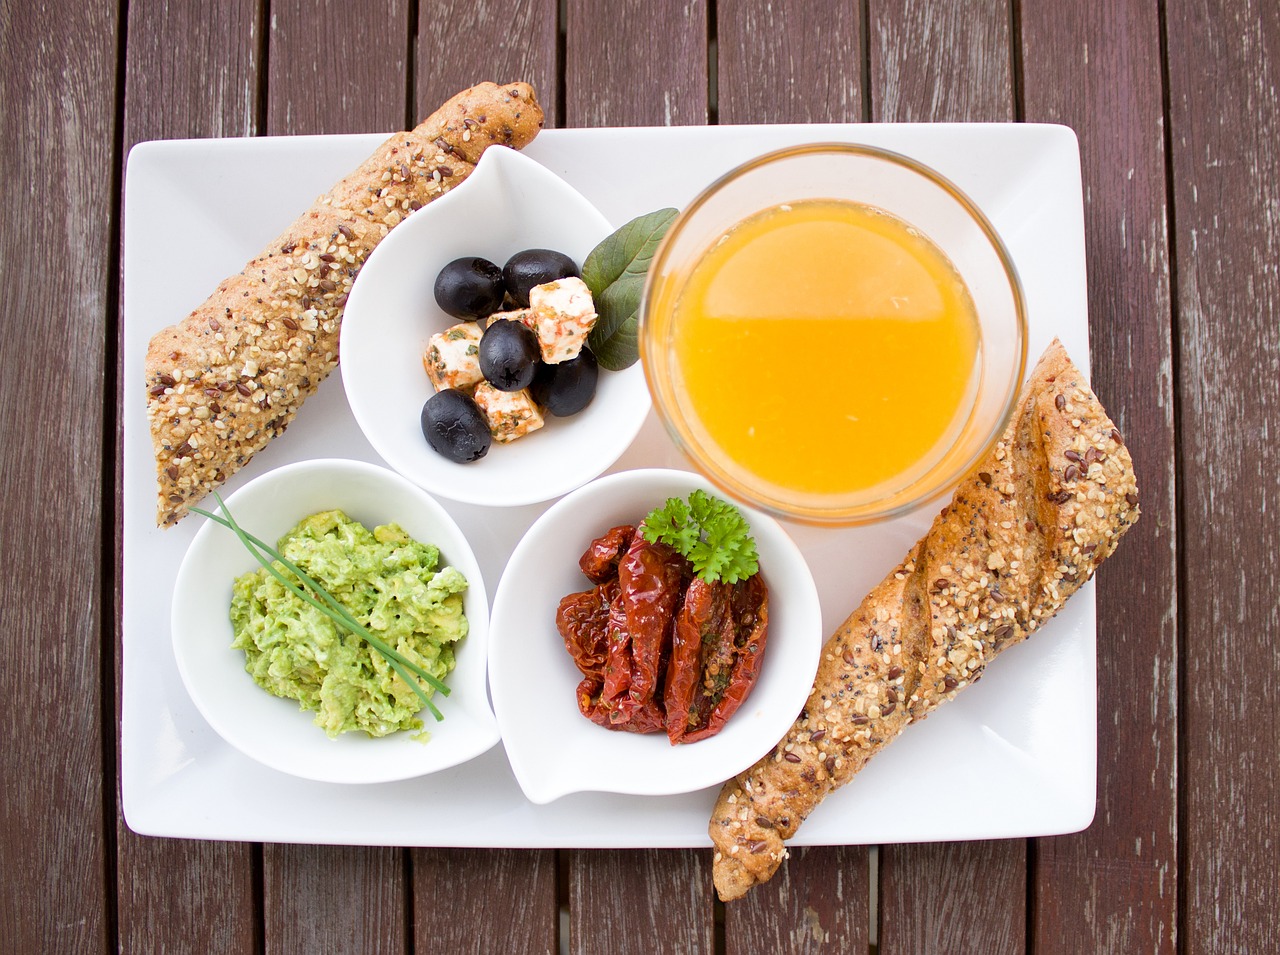 5 ingredients from the Mediterranean diet to reduce inflammation at breakfast